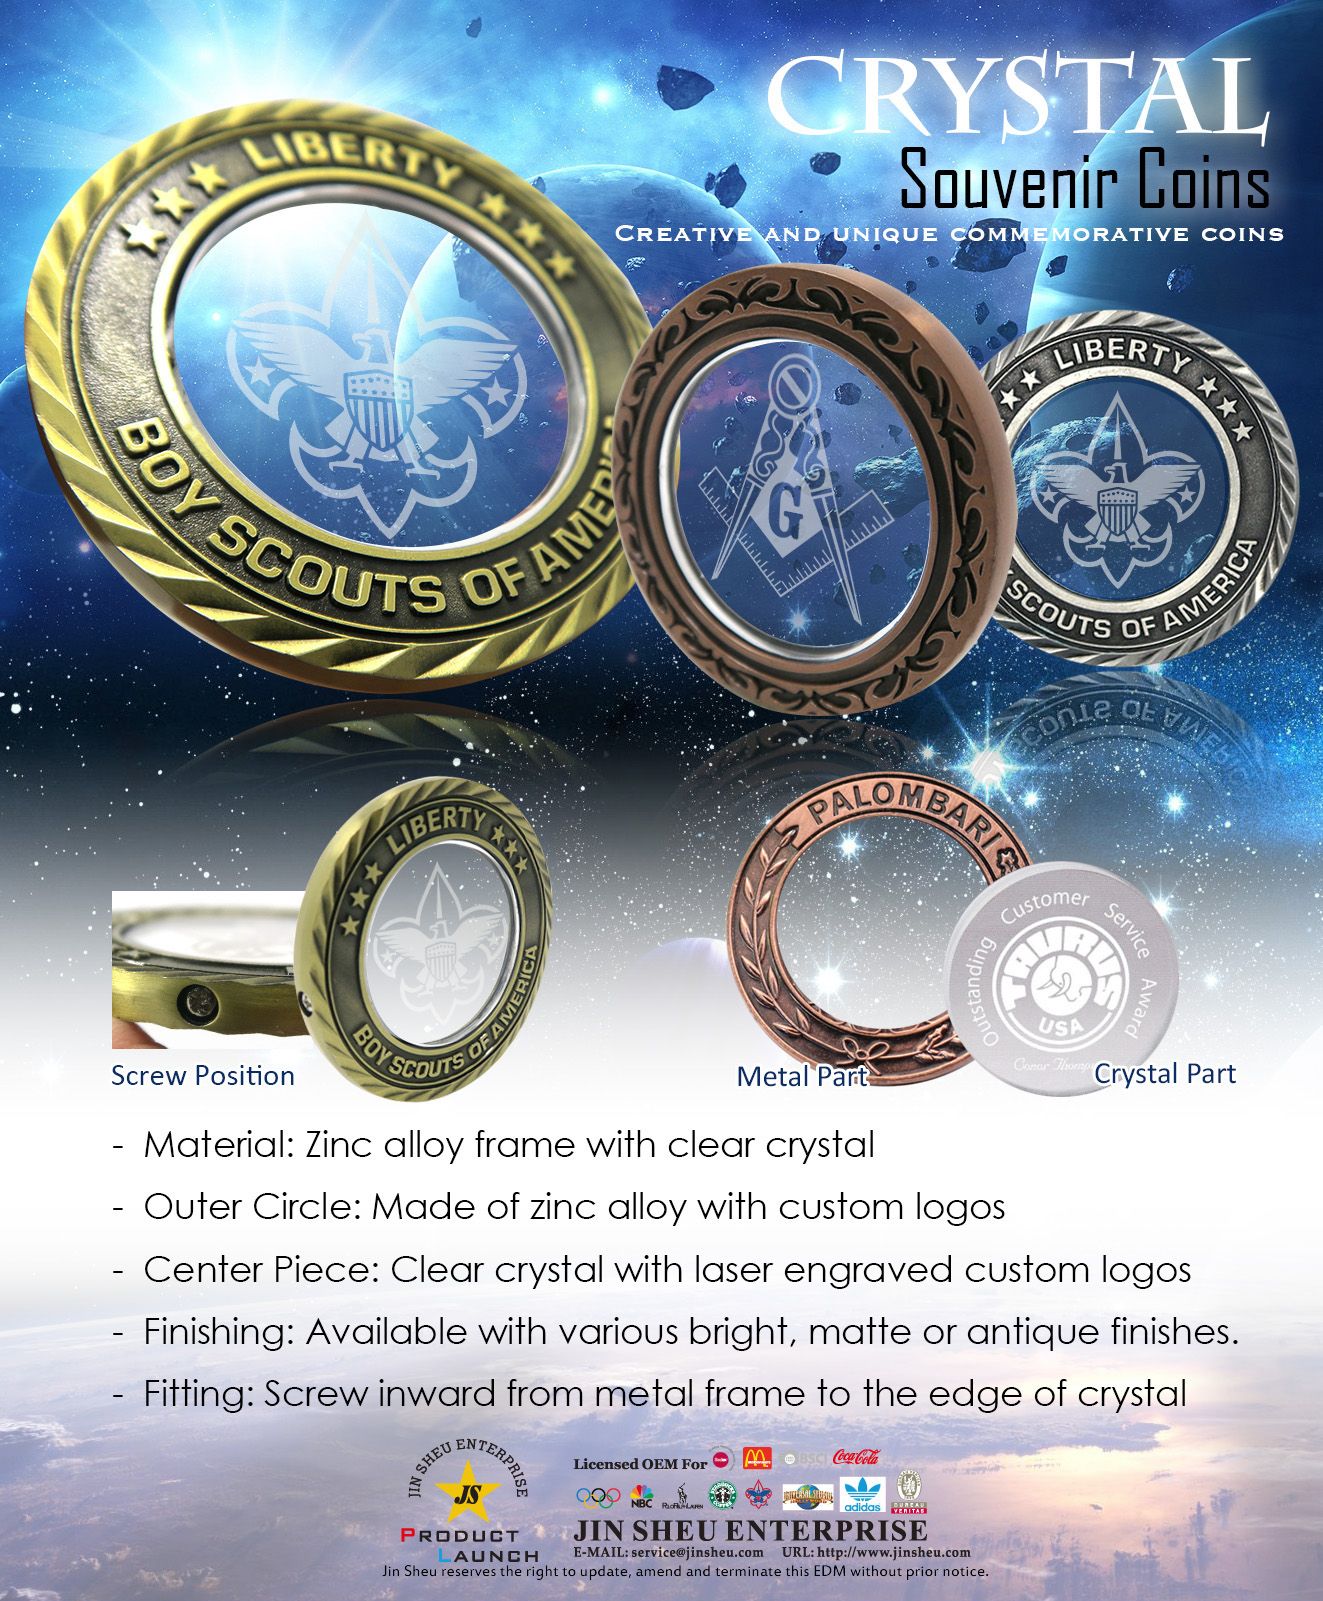 Monedas Conmemorativas de Cristal